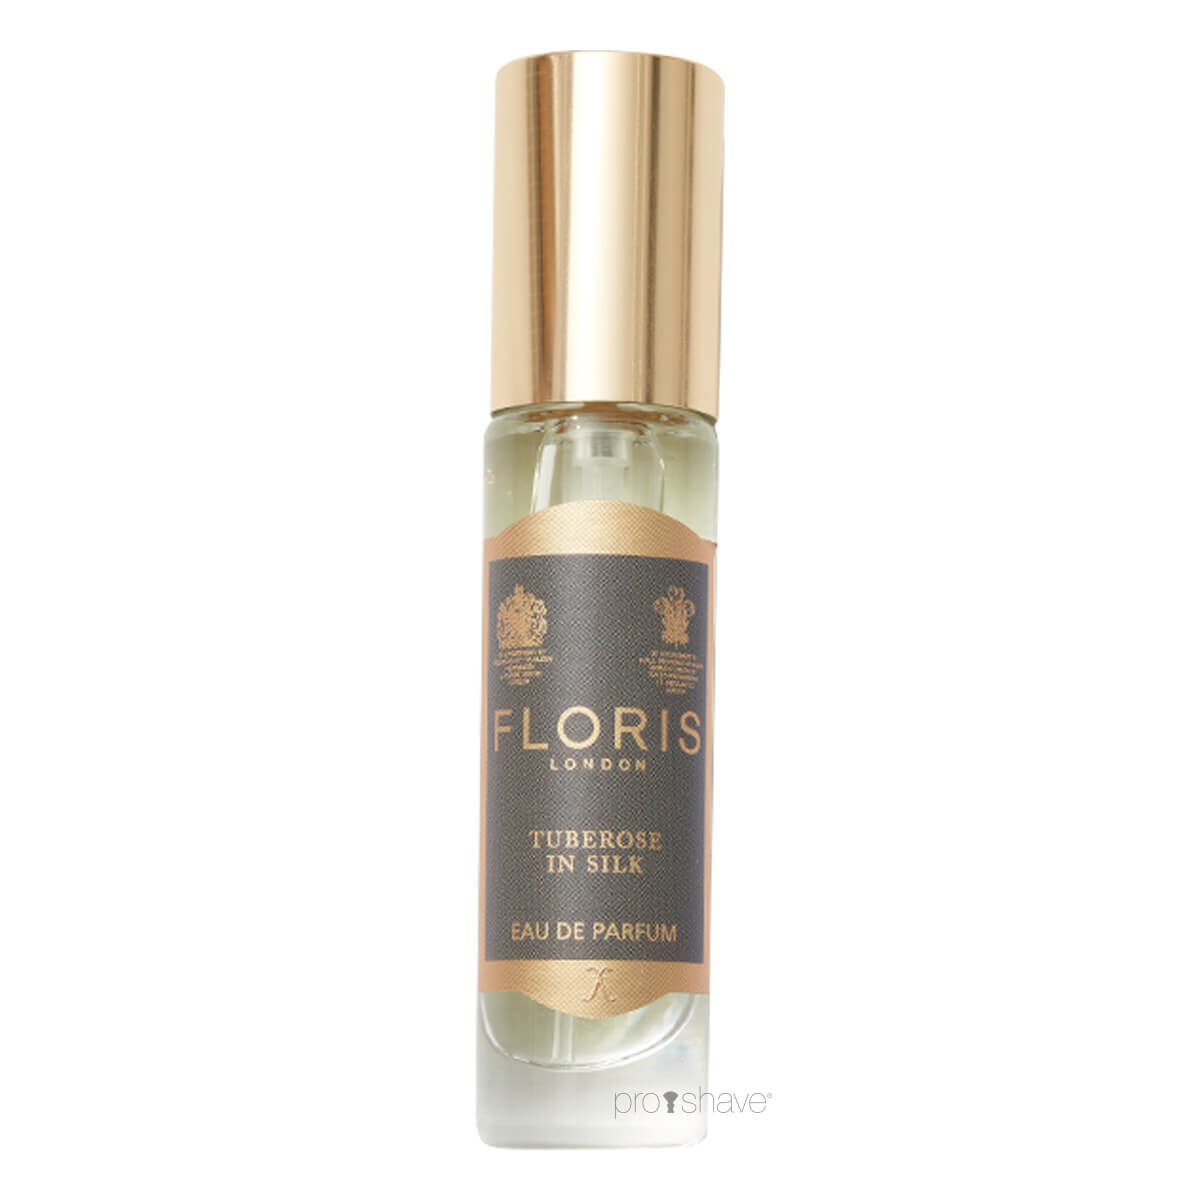 Se Floris Tuberose In Silk, Eau de Parfum, 10 ml. hos Proshave